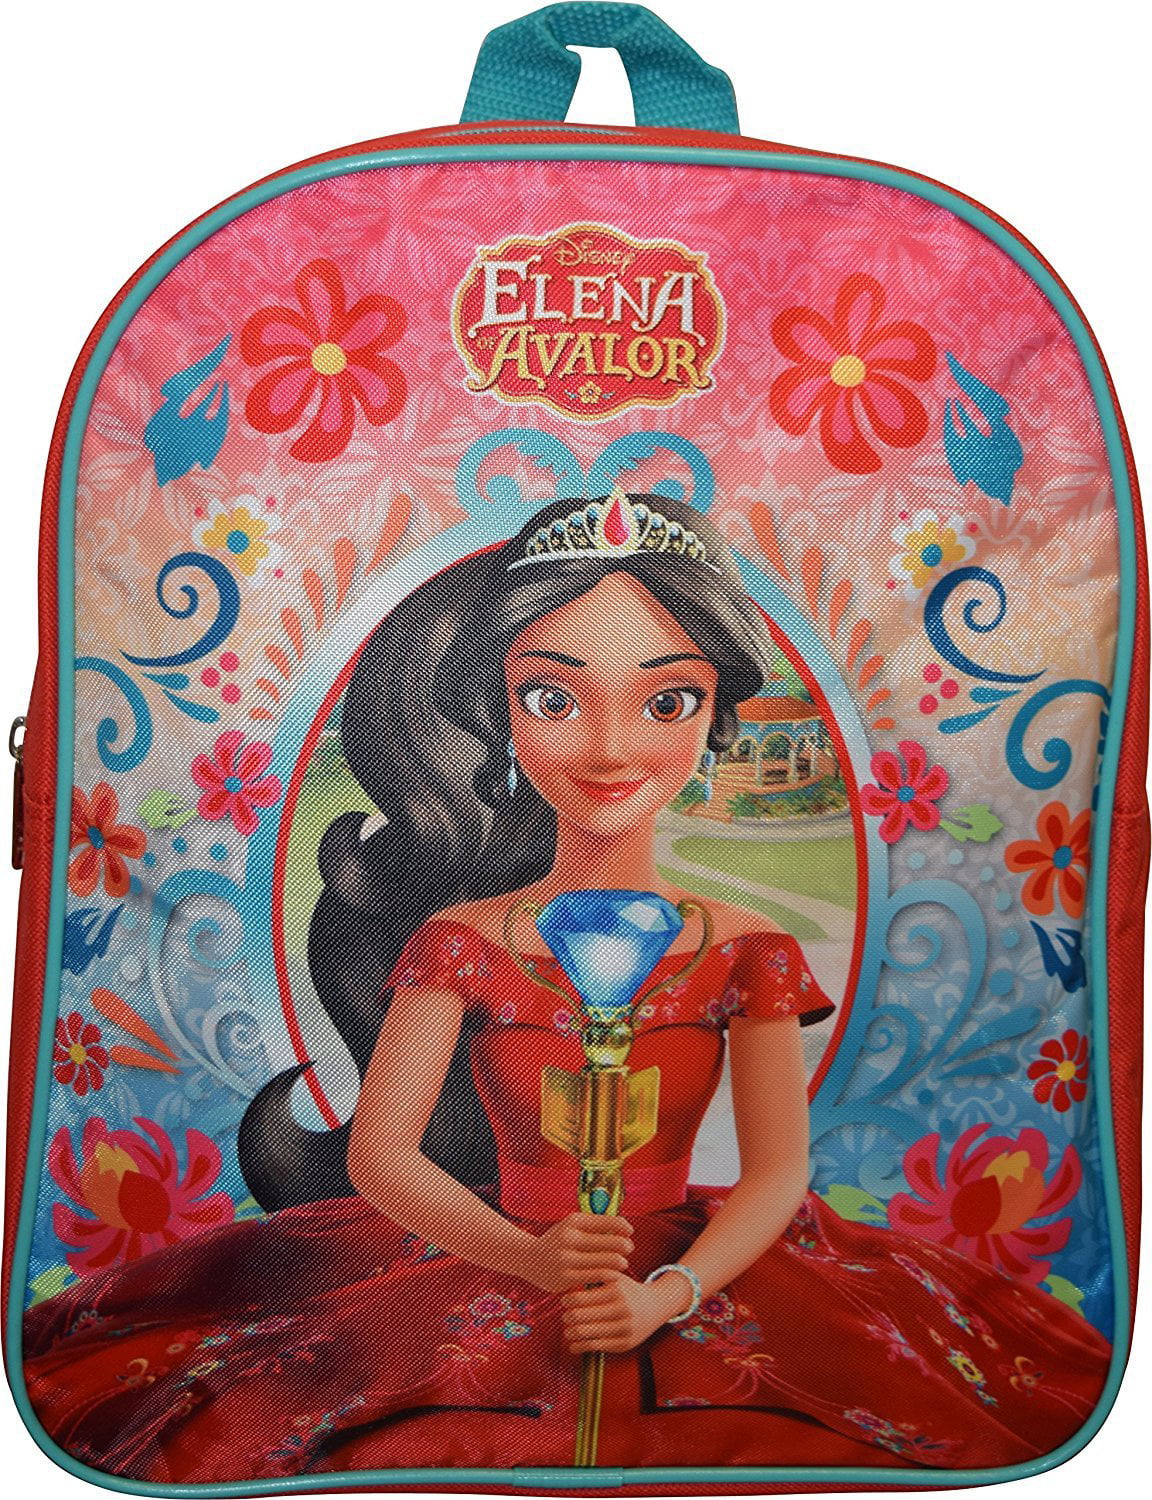 Princess Elena of Avalor 12" Toddler school Backpack Girl's Book Bag 